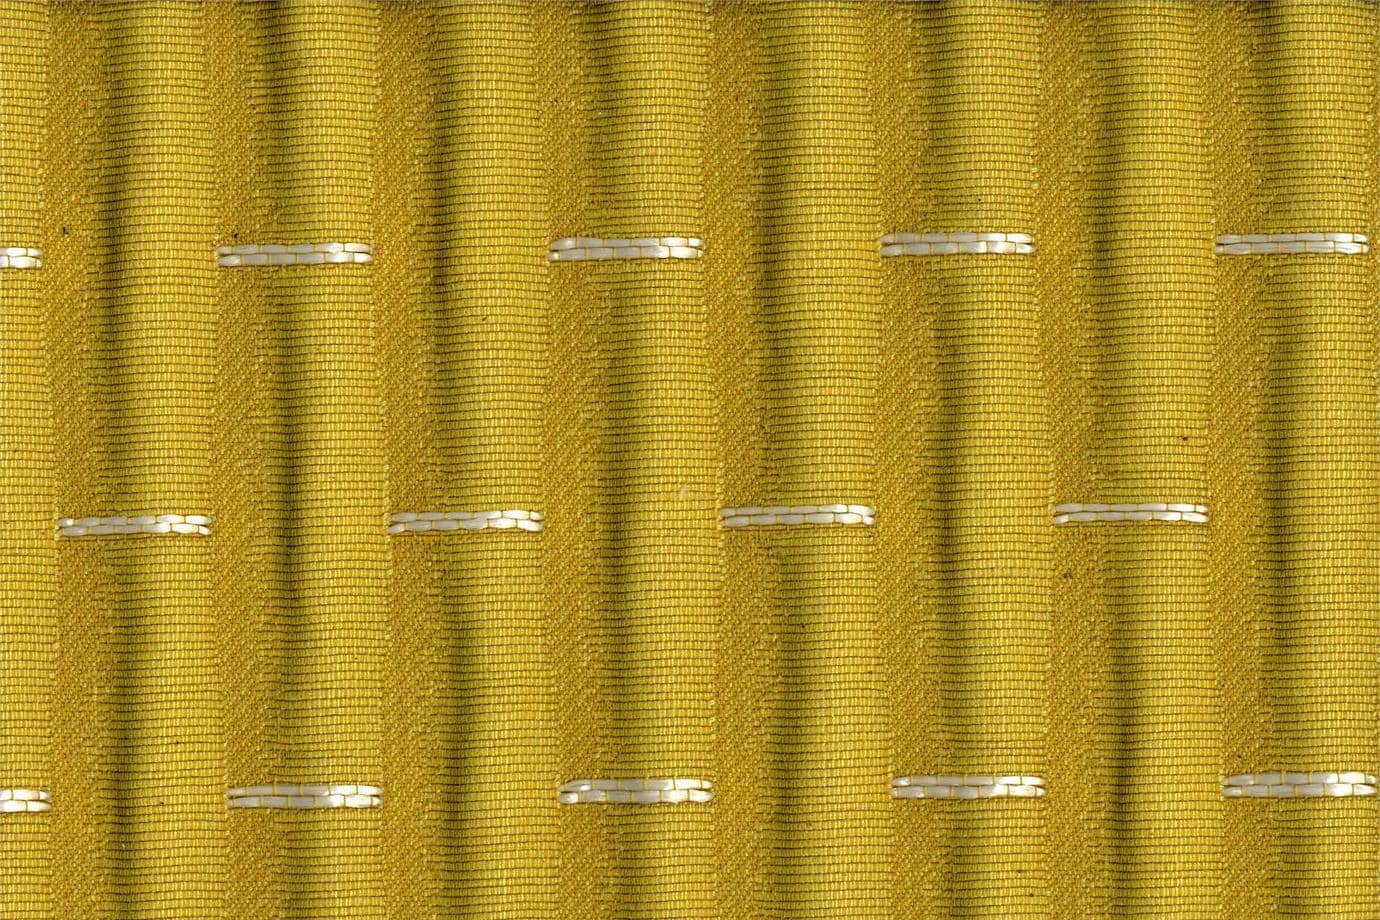 J3812 MIMETIC FLOWER 004 Verde home decoration fabric